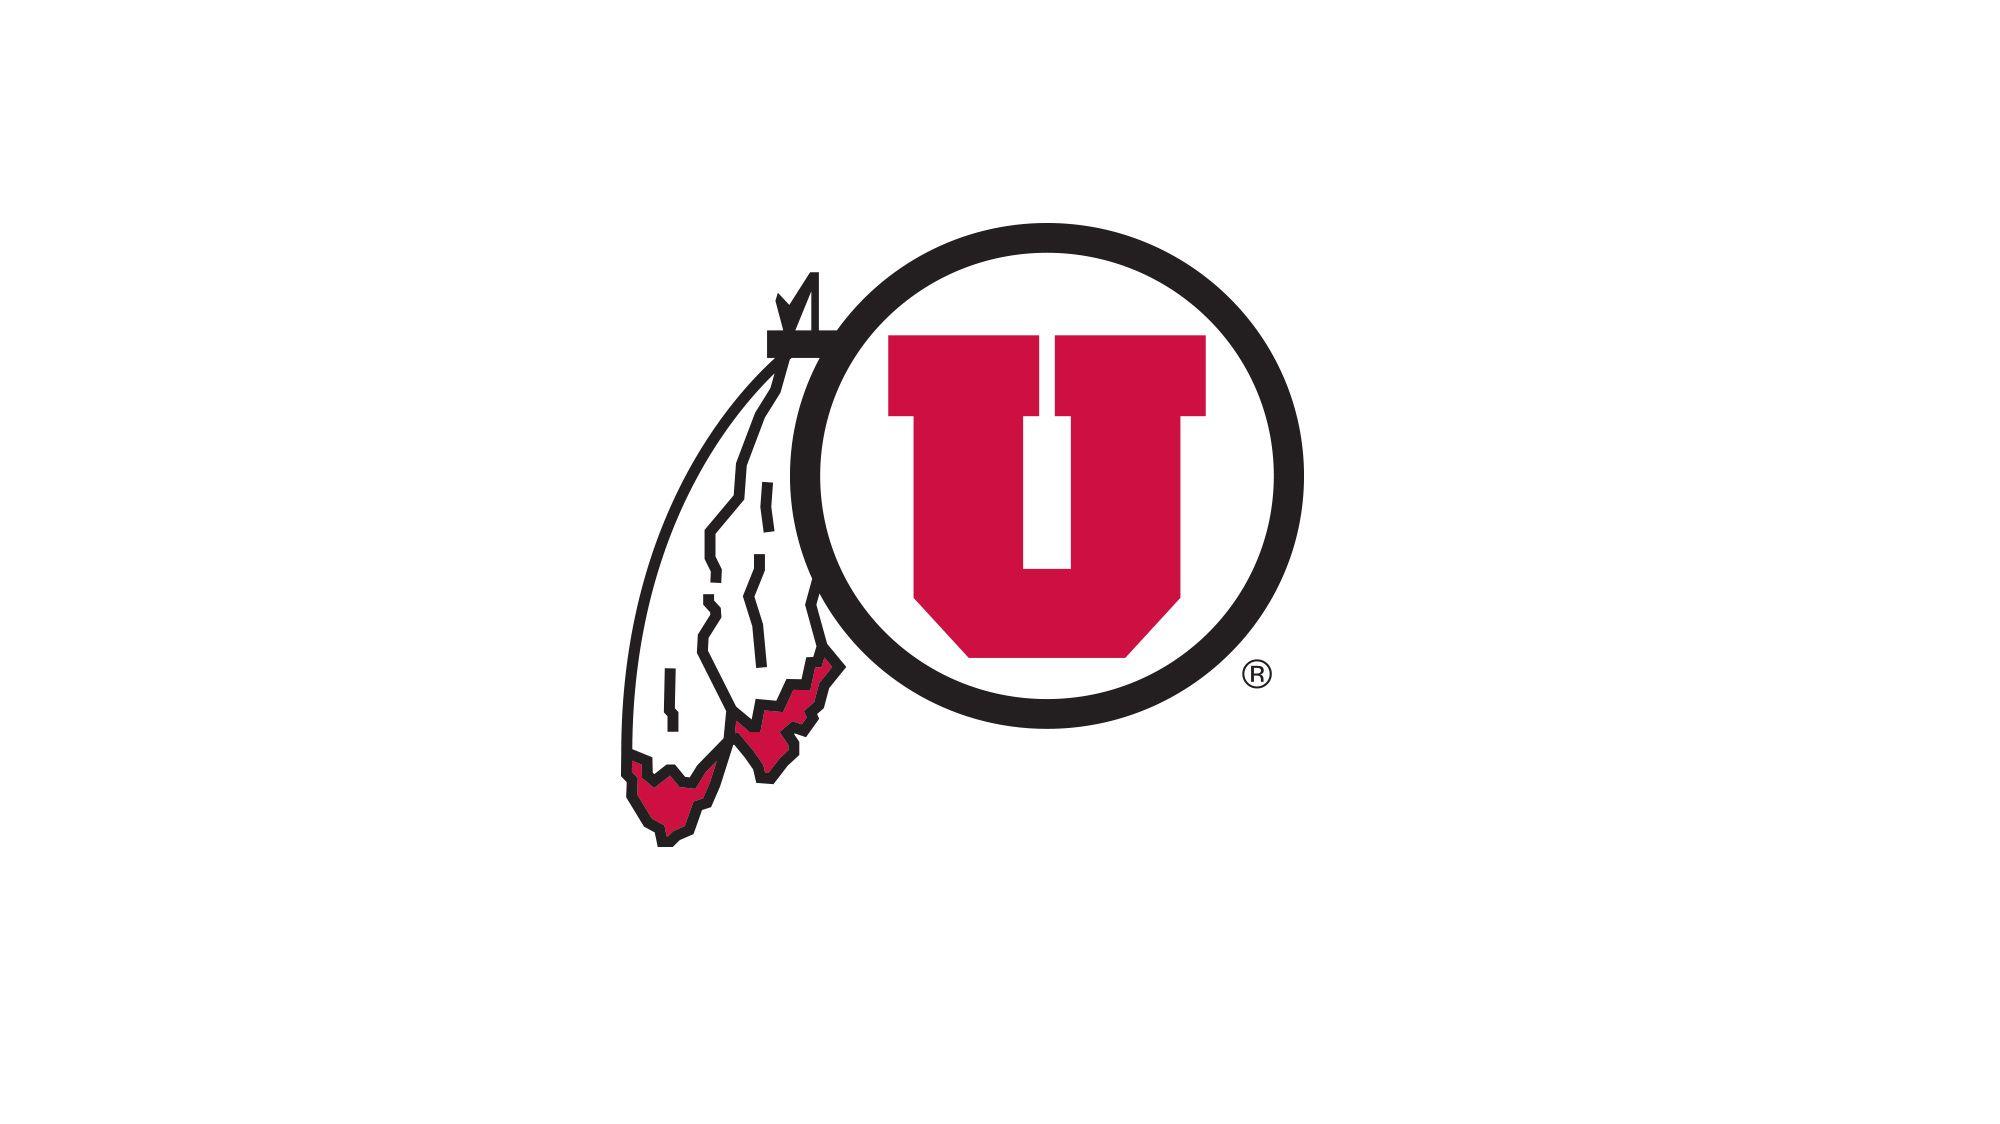 University of Utah Utes Logo - Utah Athletics to Partner with Learfield - University of Utah Athletics